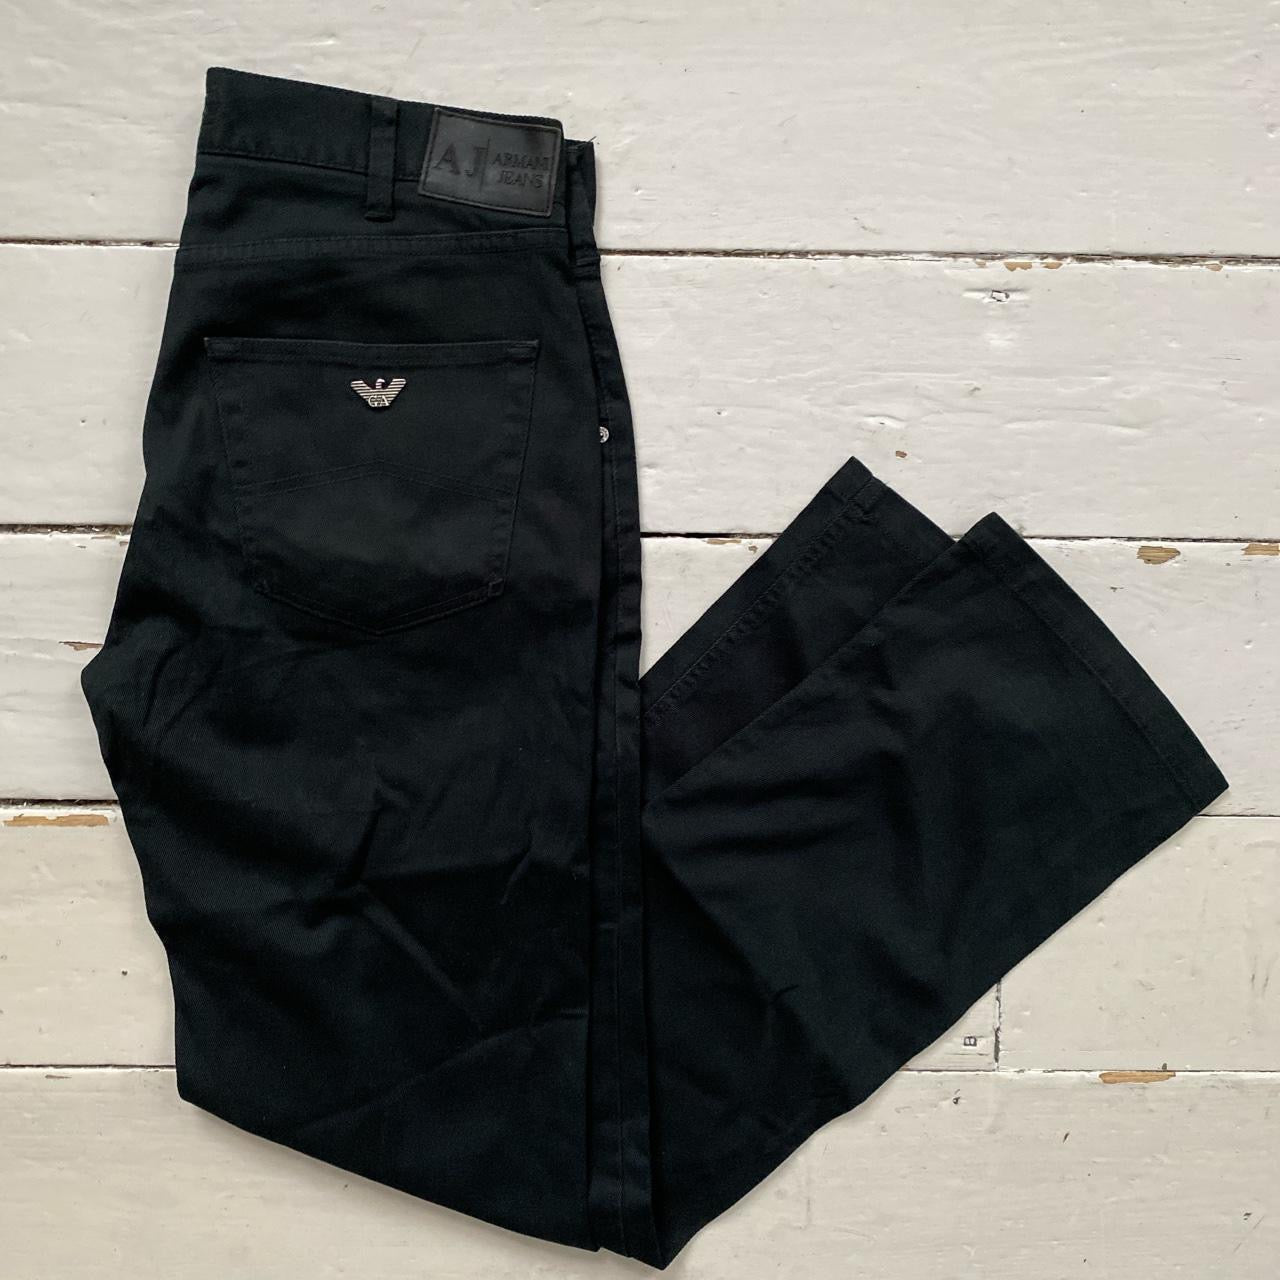 Armani Black Jeans (32/32)